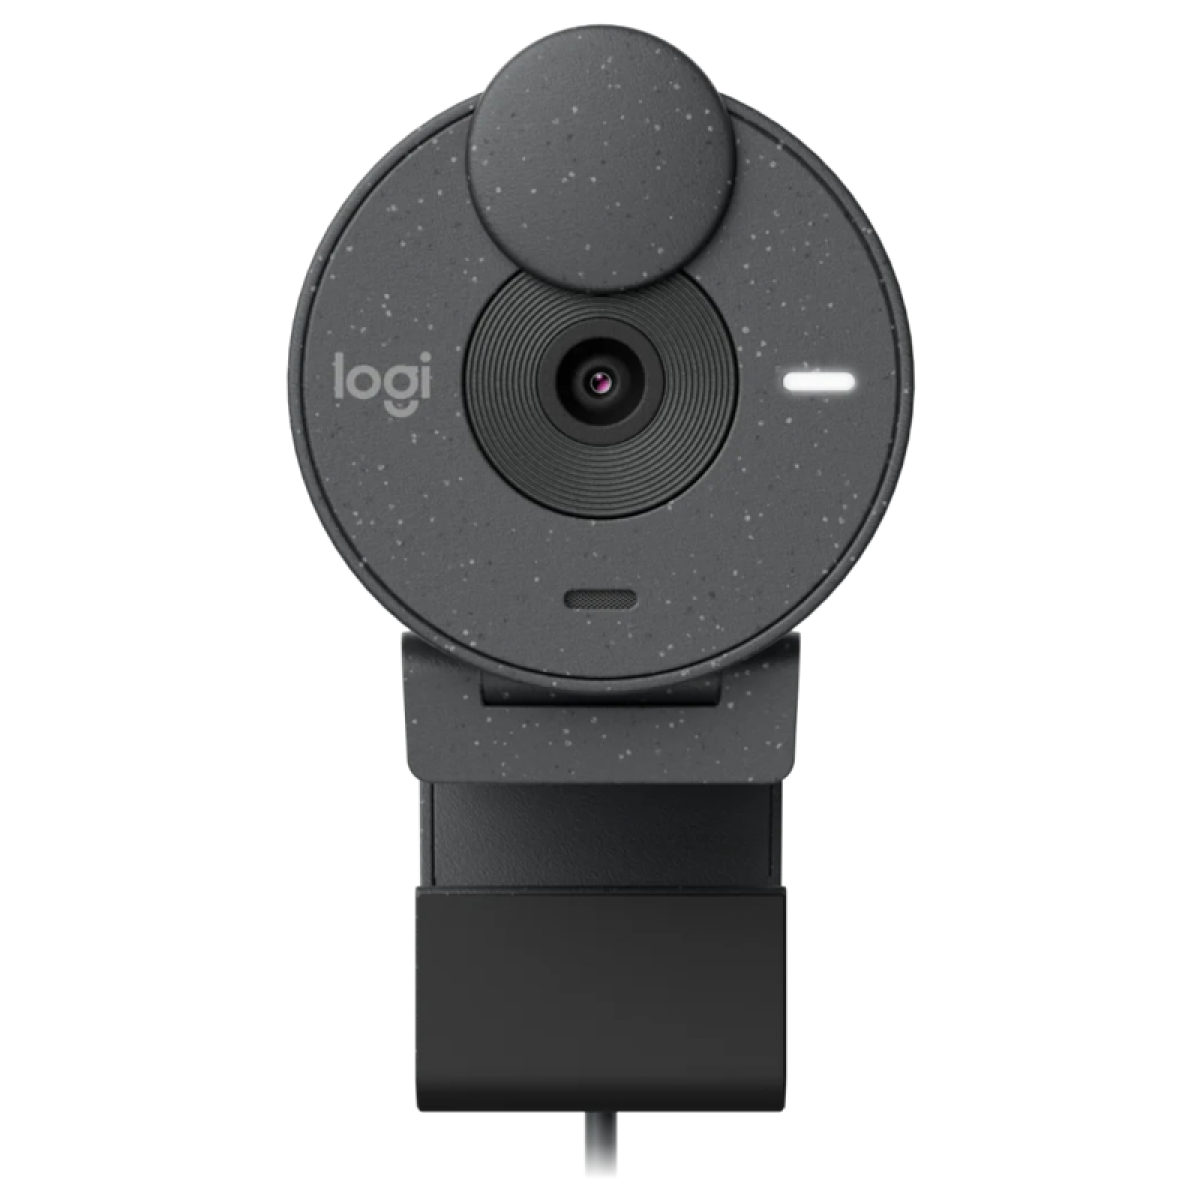 Brio 305 Full HD Webcam